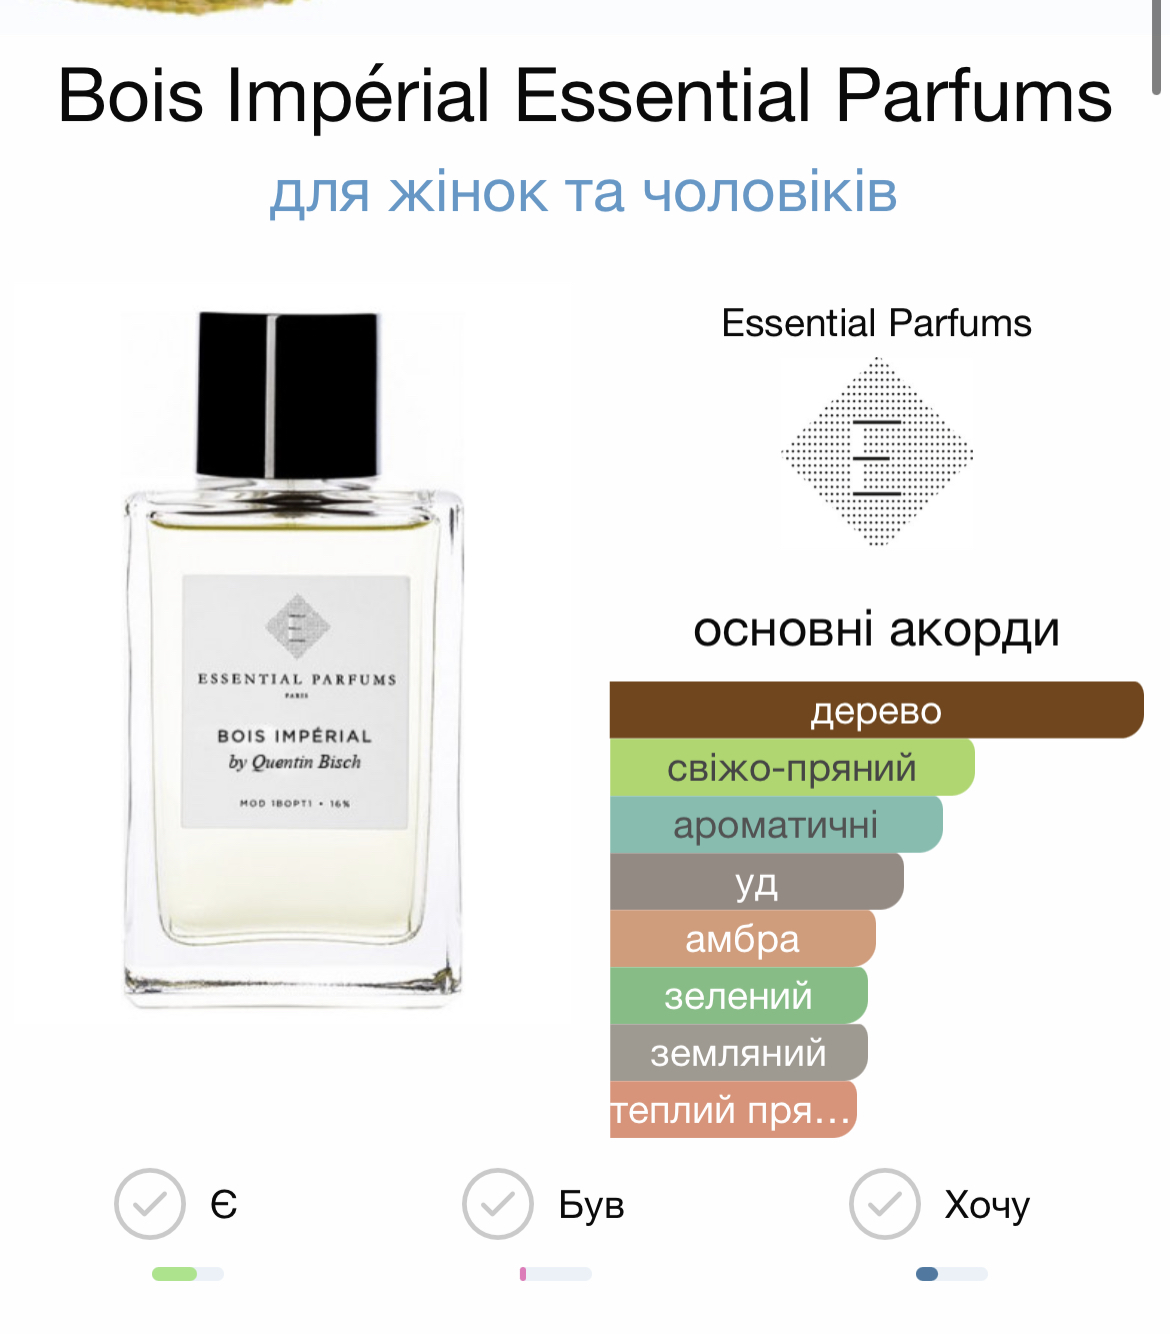 Essential Parfums Bois Imperial